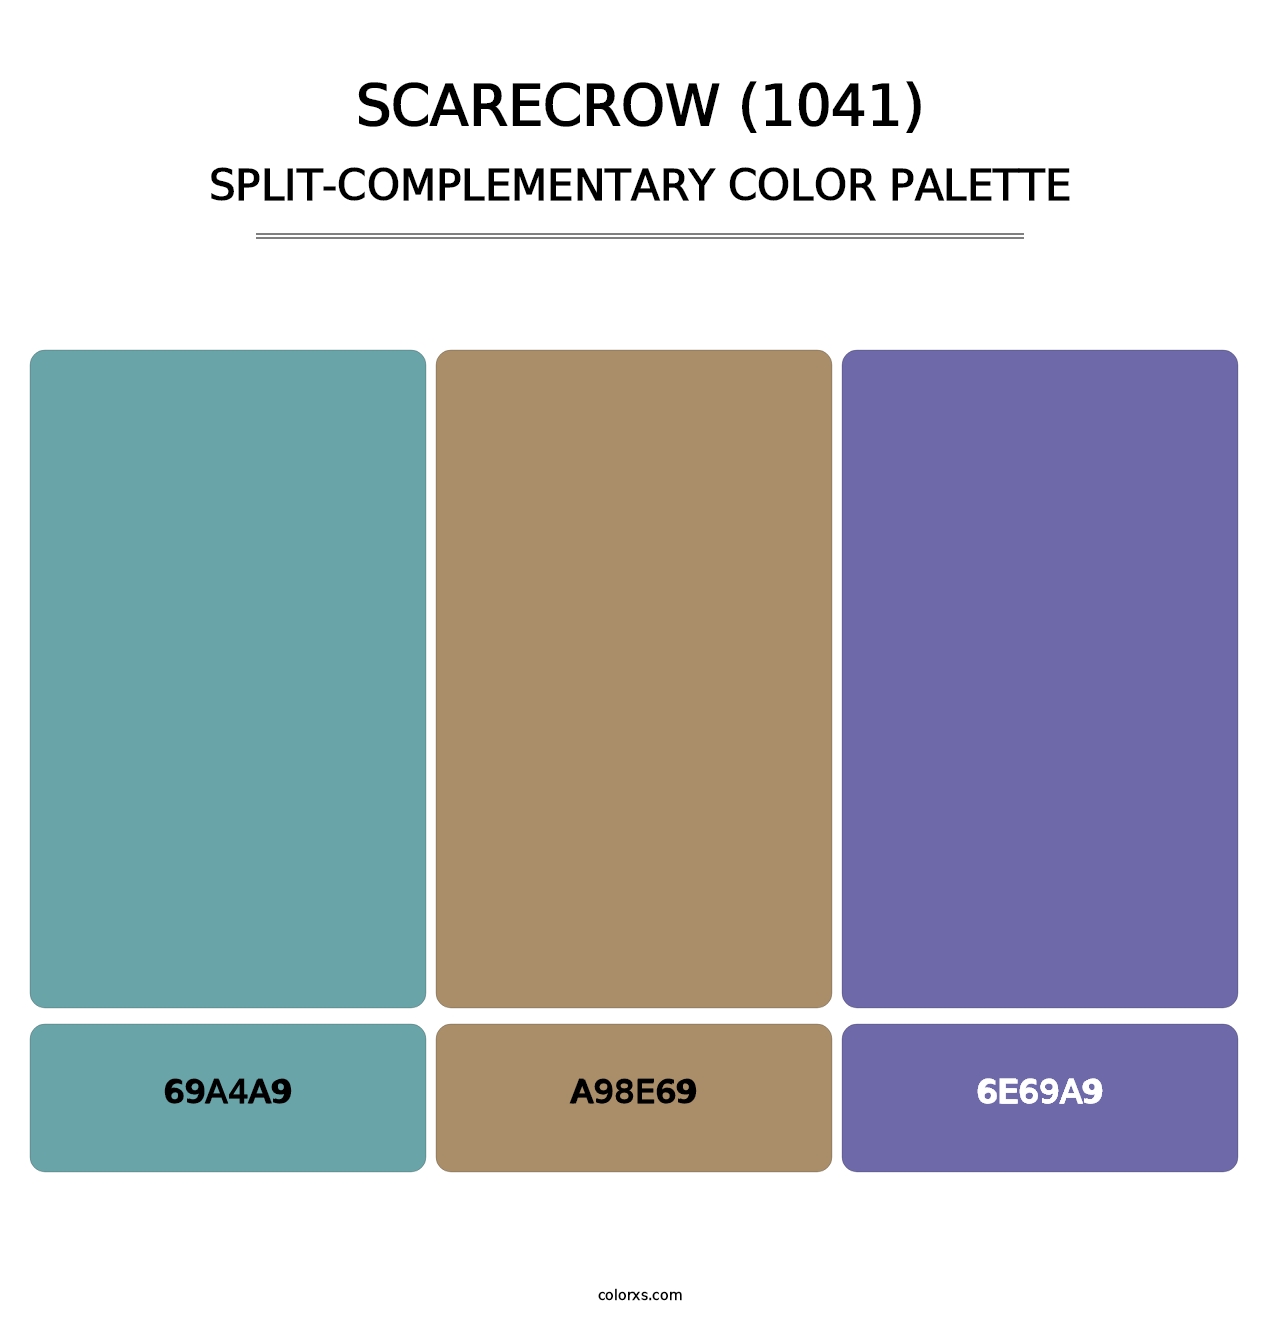 Scarecrow (1041) - Split-Complementary Color Palette